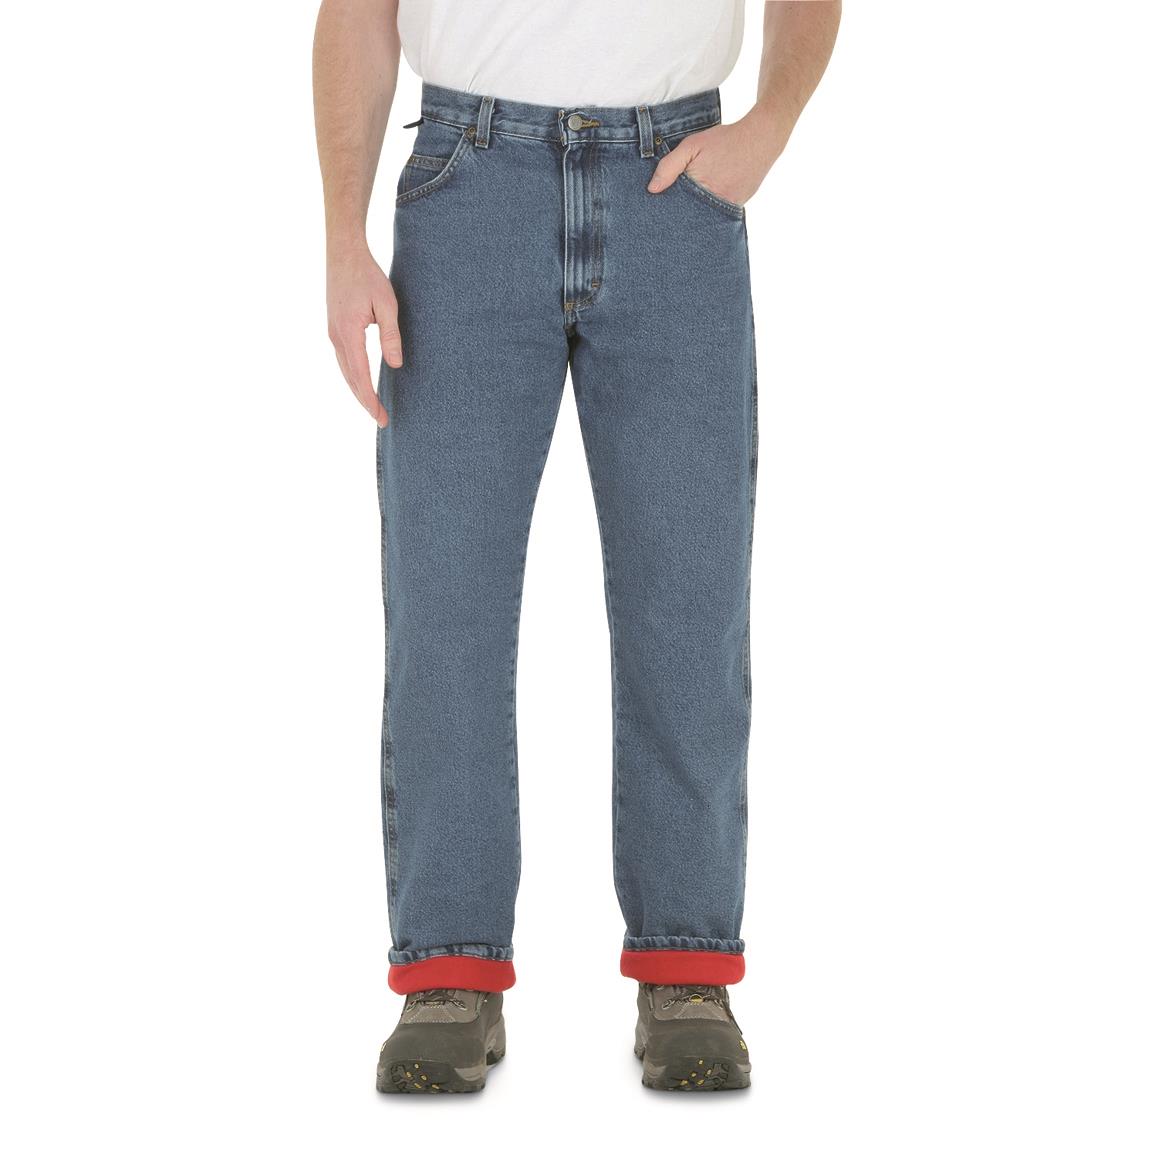 Wrangler Men's Rugged Wear Thermal Jeans, Stonewash